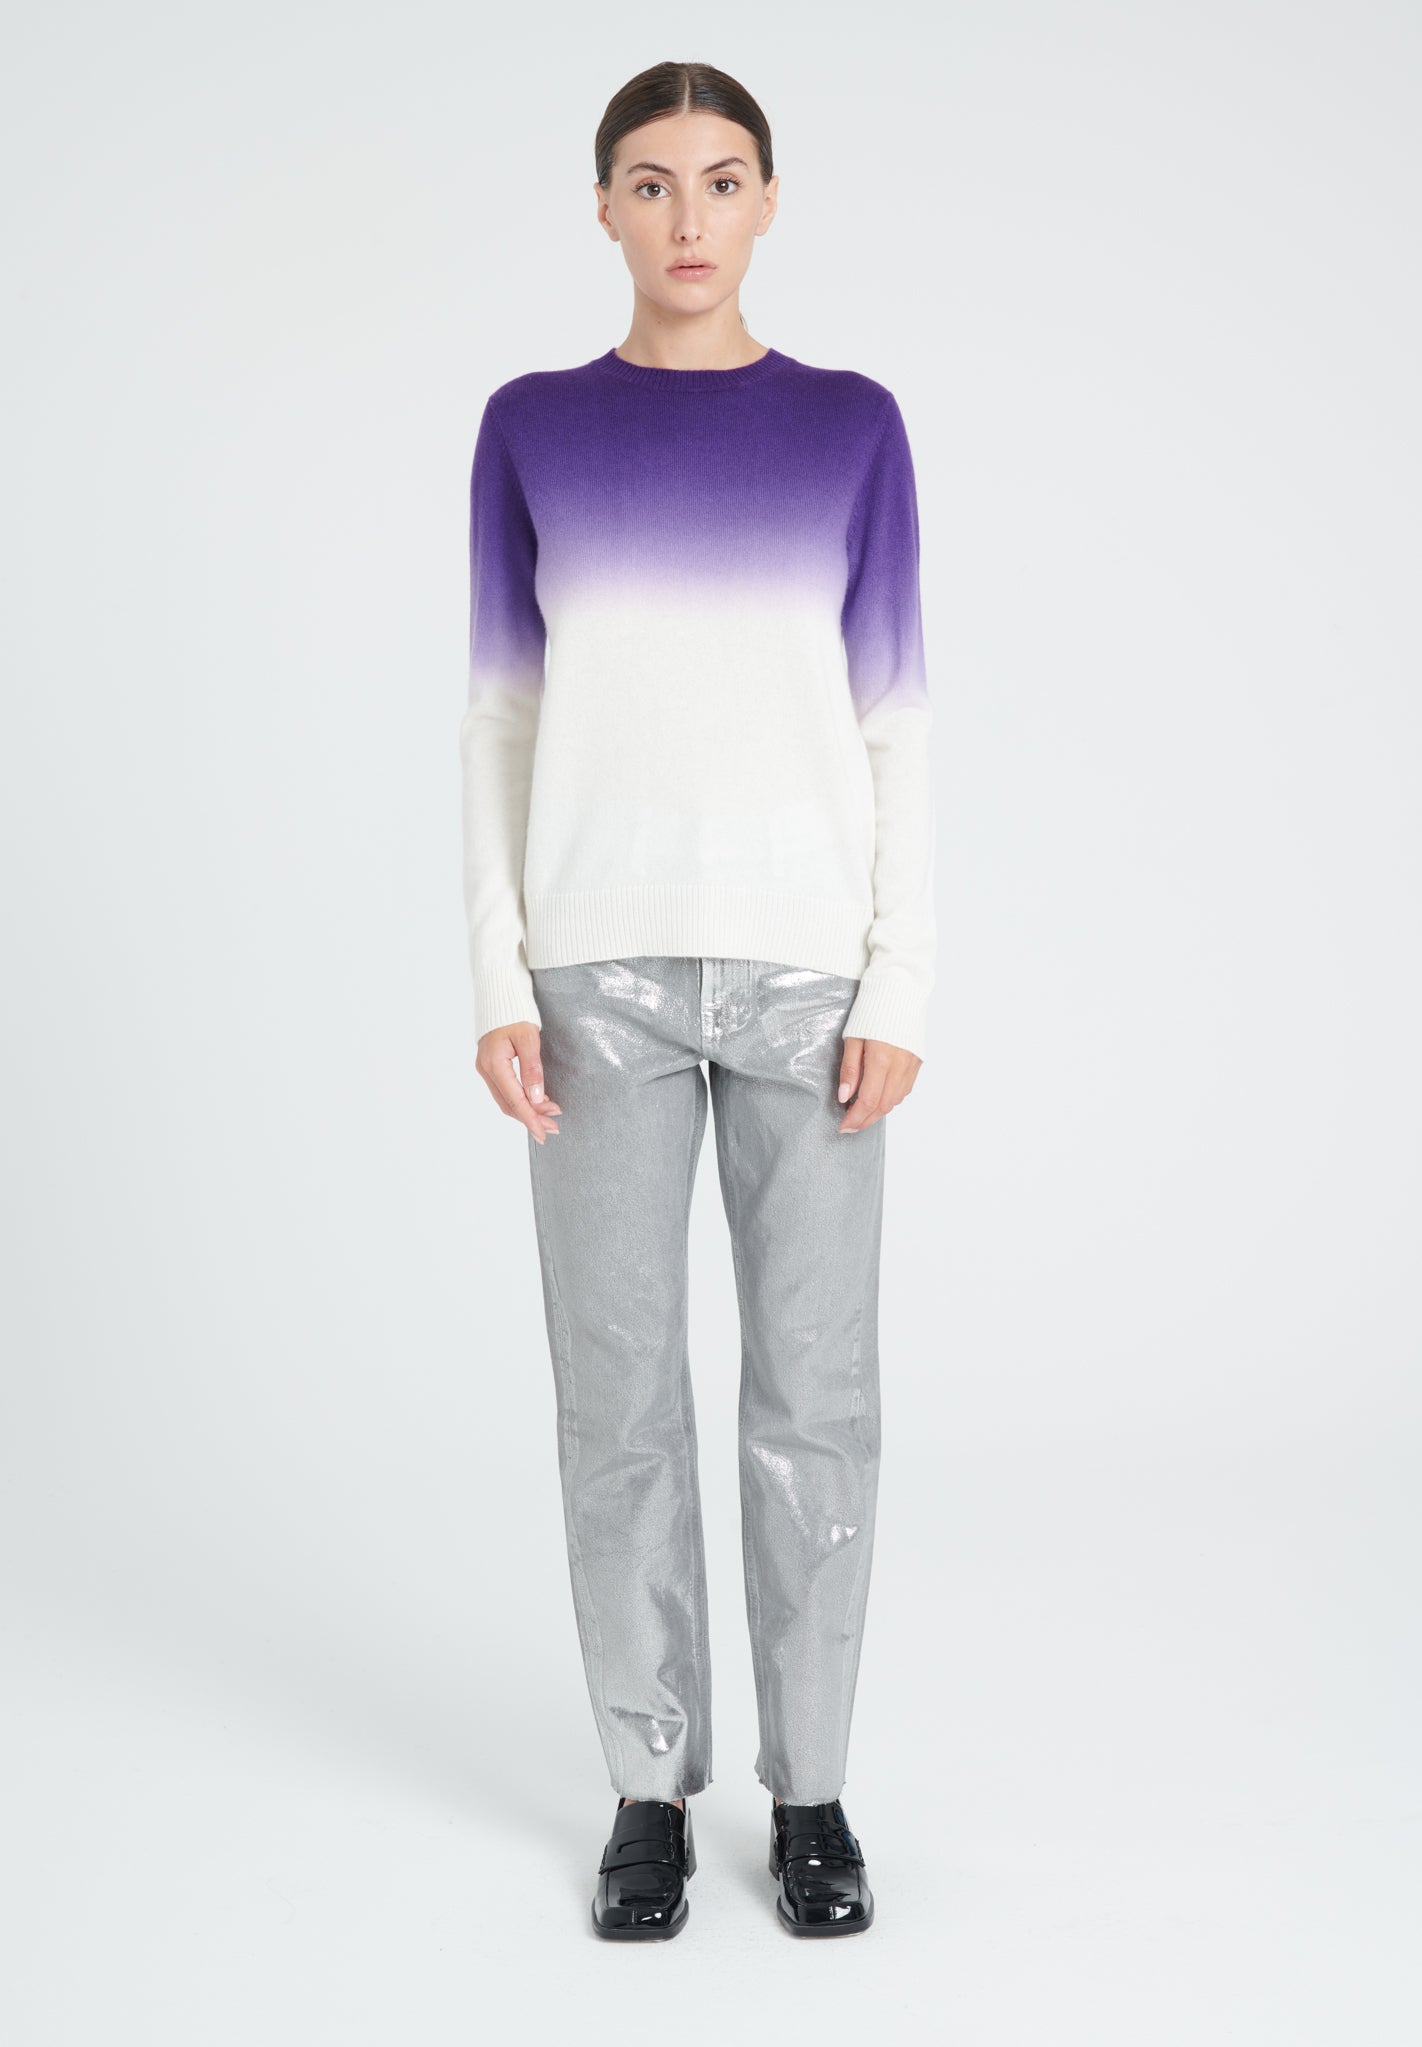 ZAYA 9 Round neck tye &amp; dye sweater in ecru and dark purple cashmere